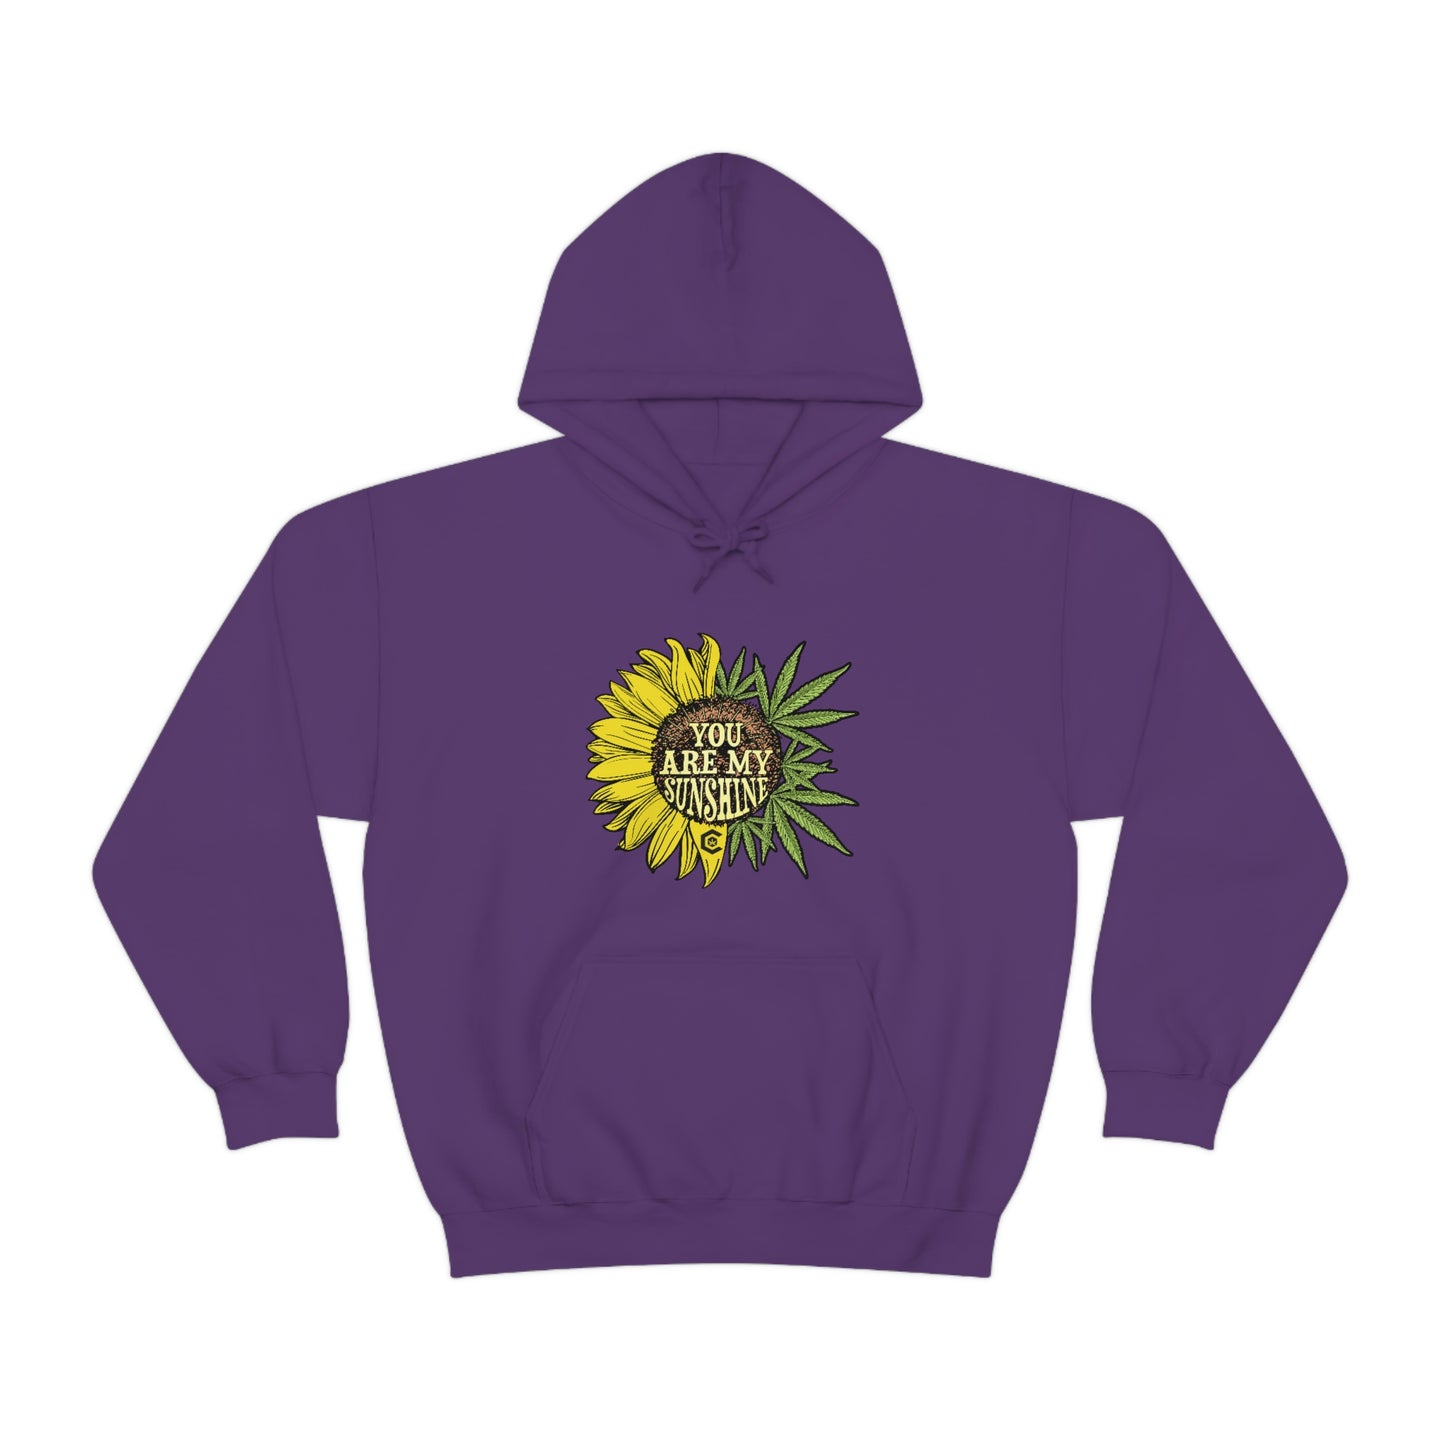 You Are My Sunshine Cannabis Sweatshirt: a purple hoodie with a sunflower on it.